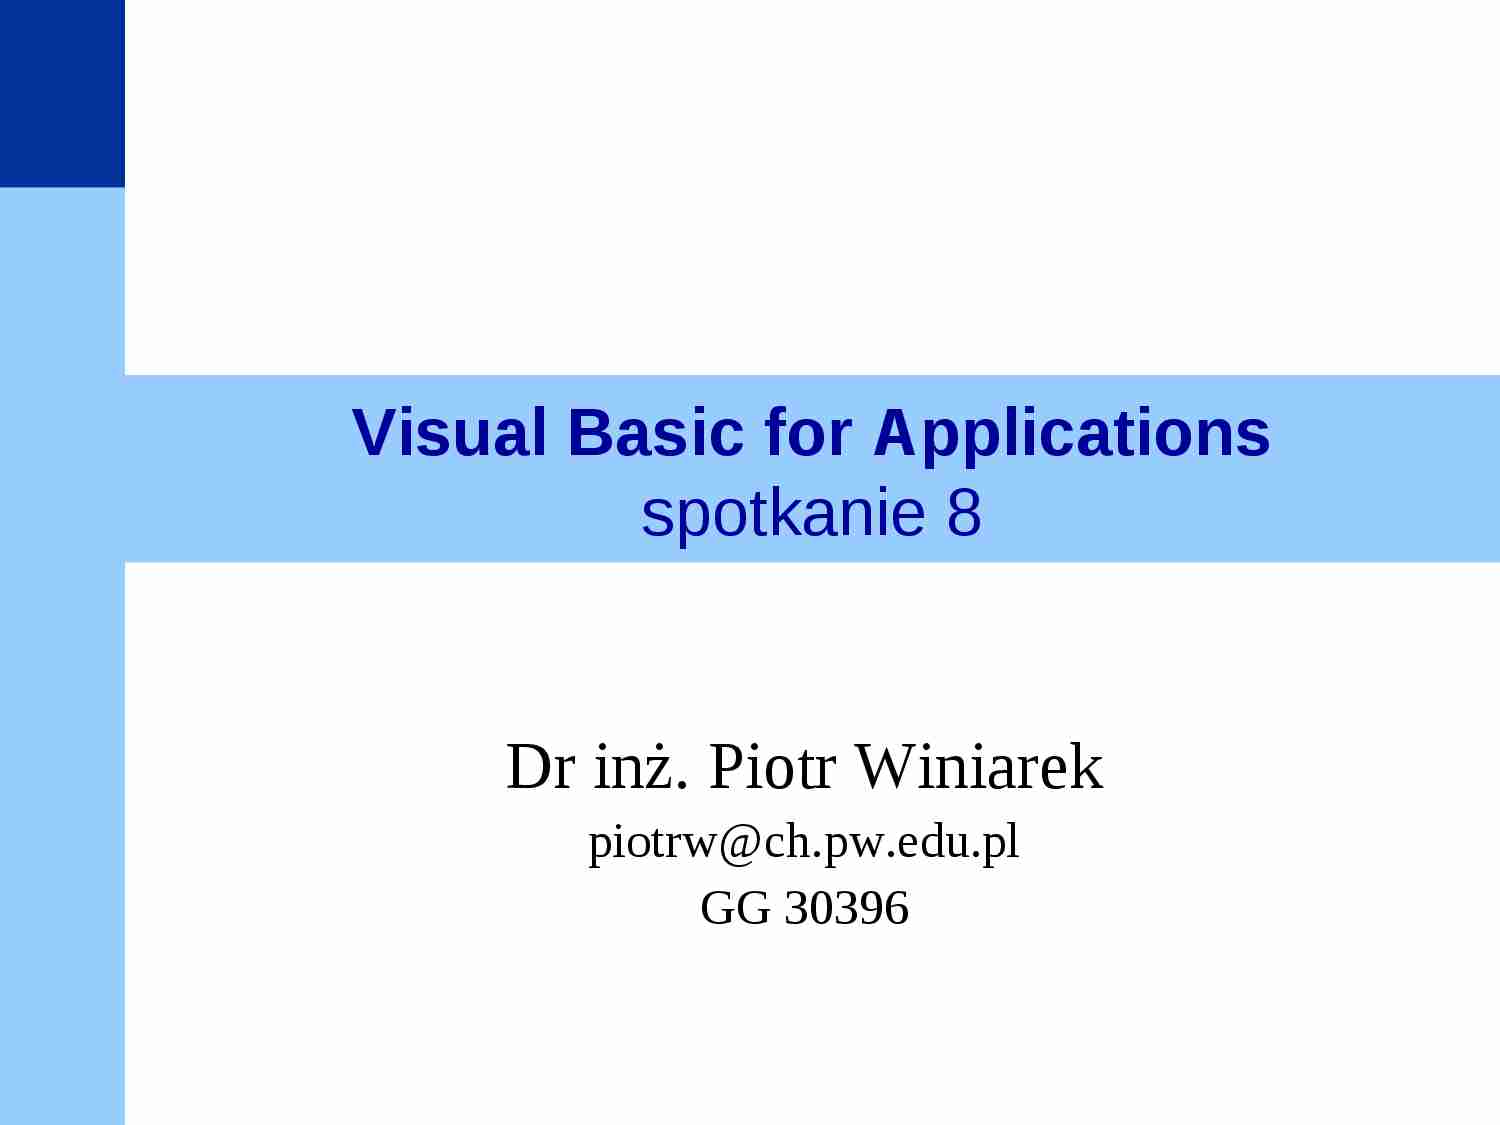 Visual Basic for Applications - prezentacja - strona 1